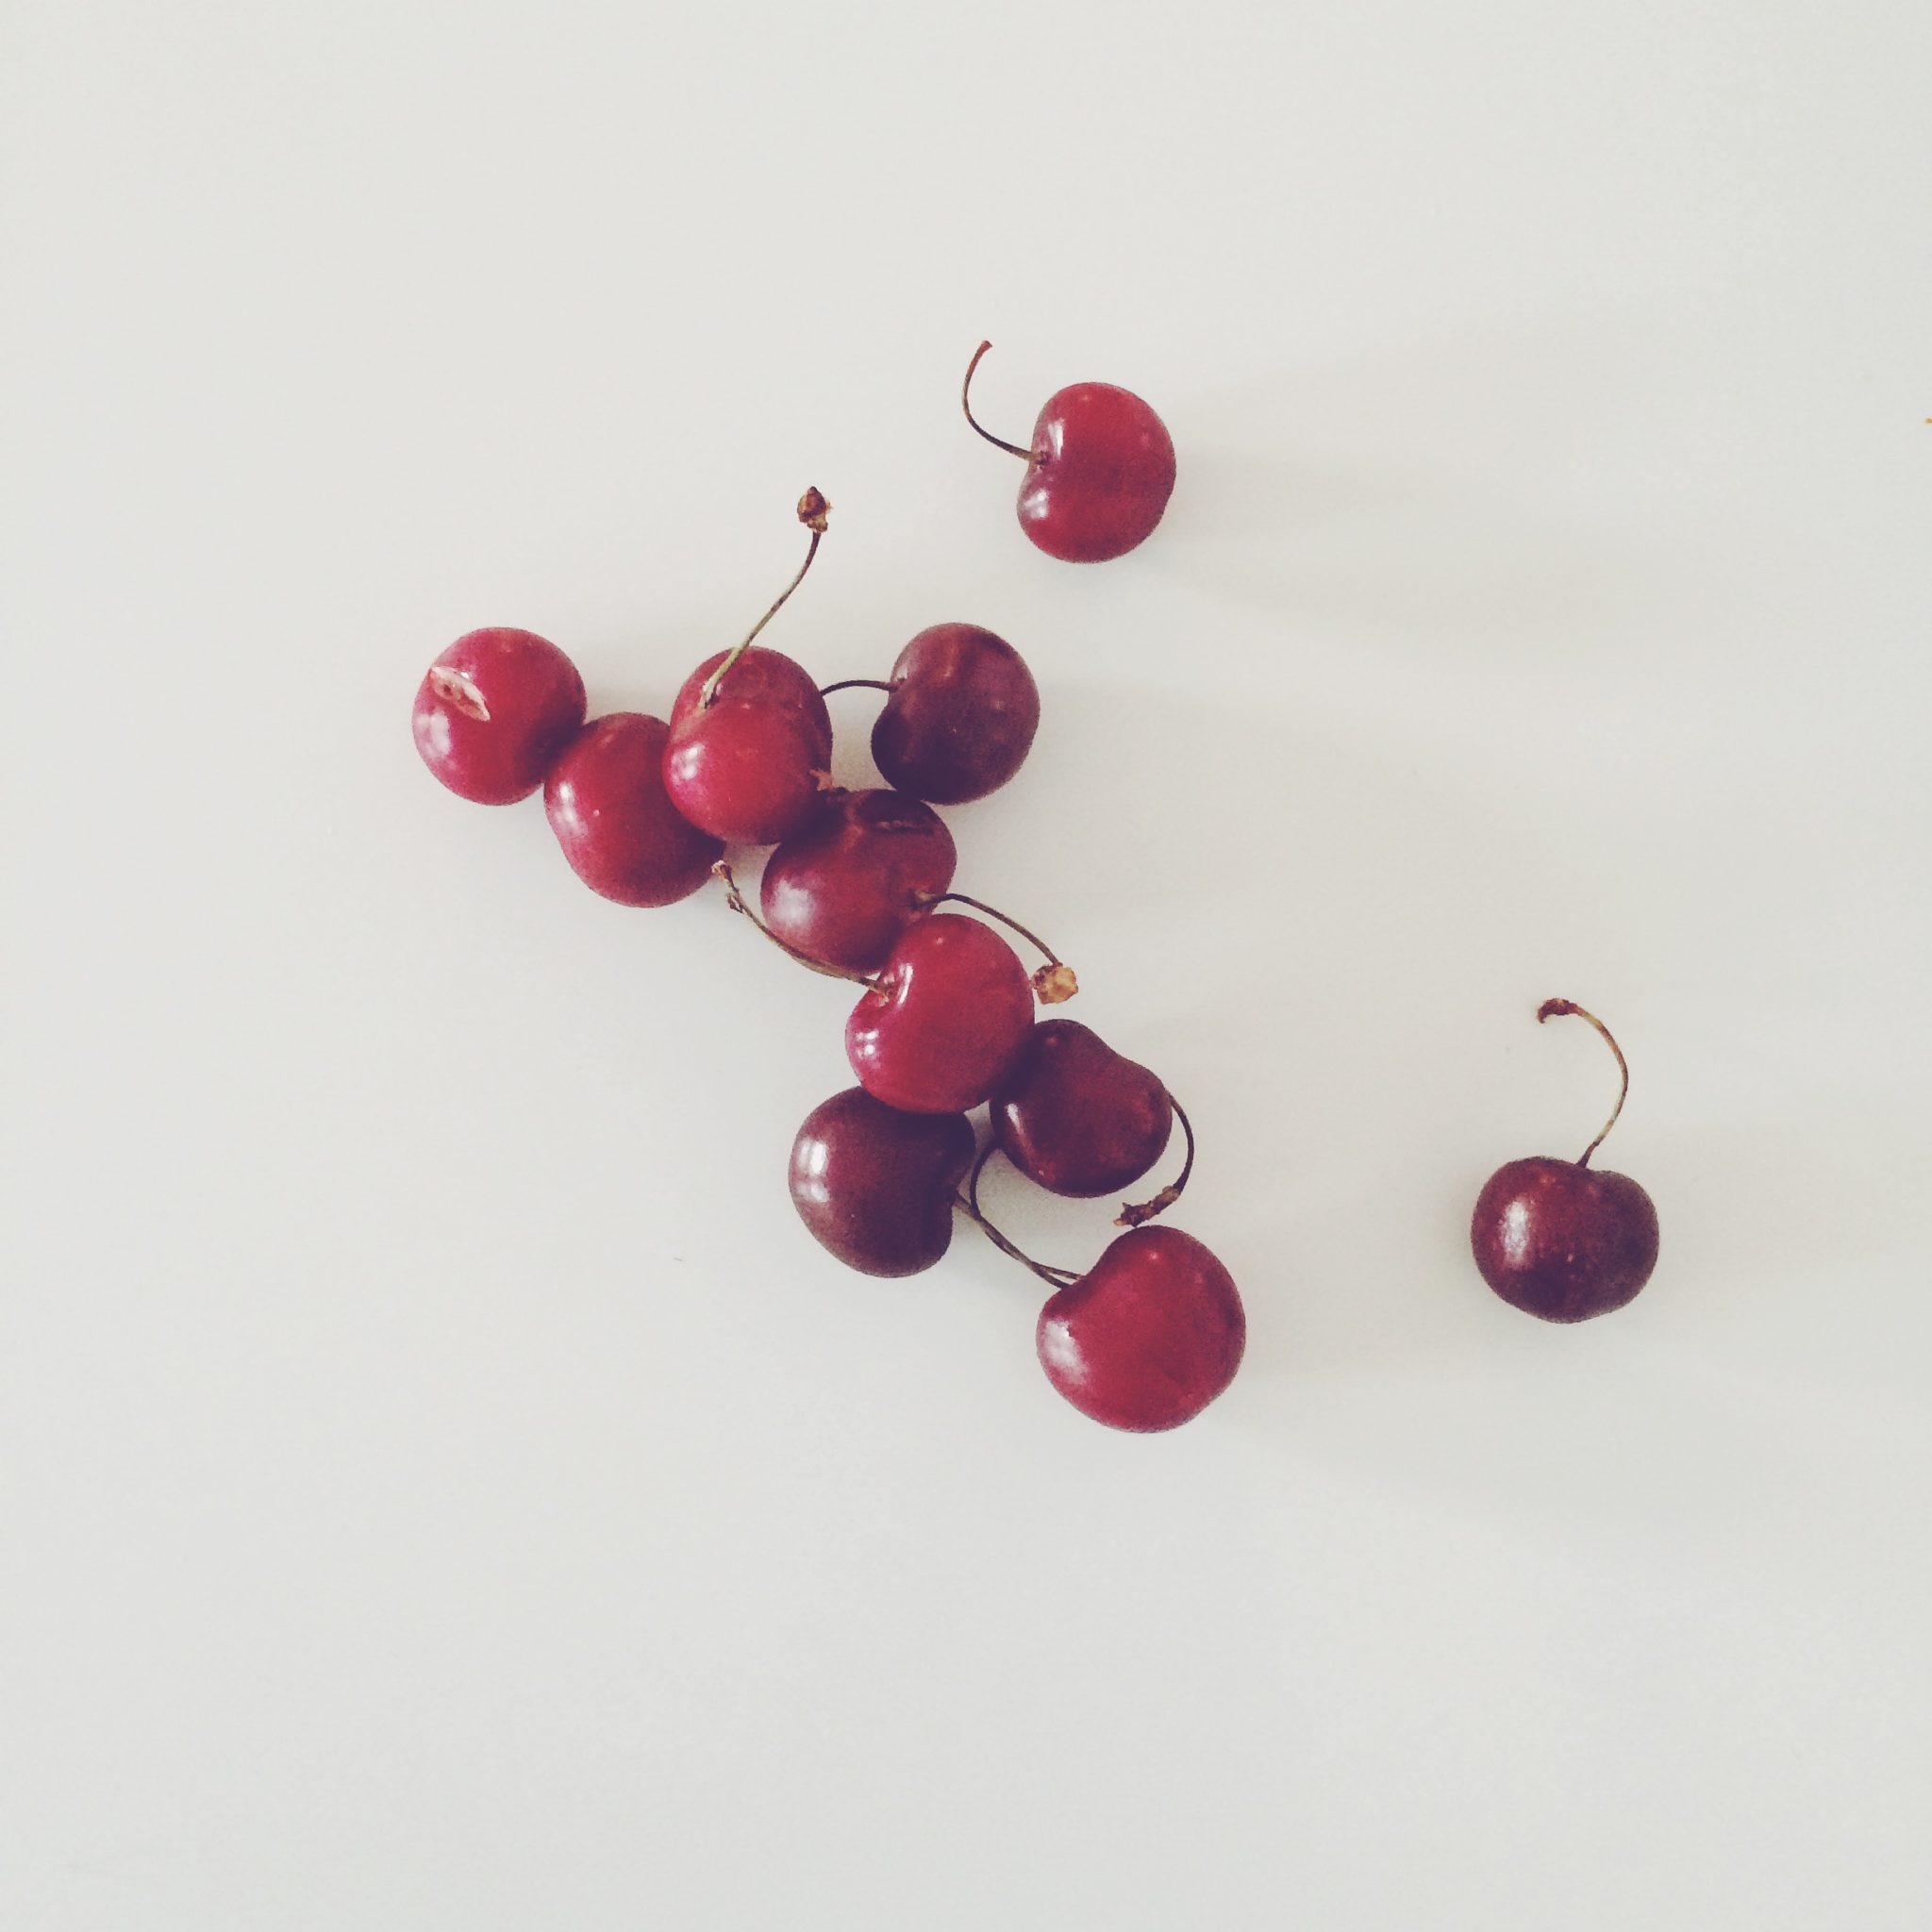 Cherries on white table